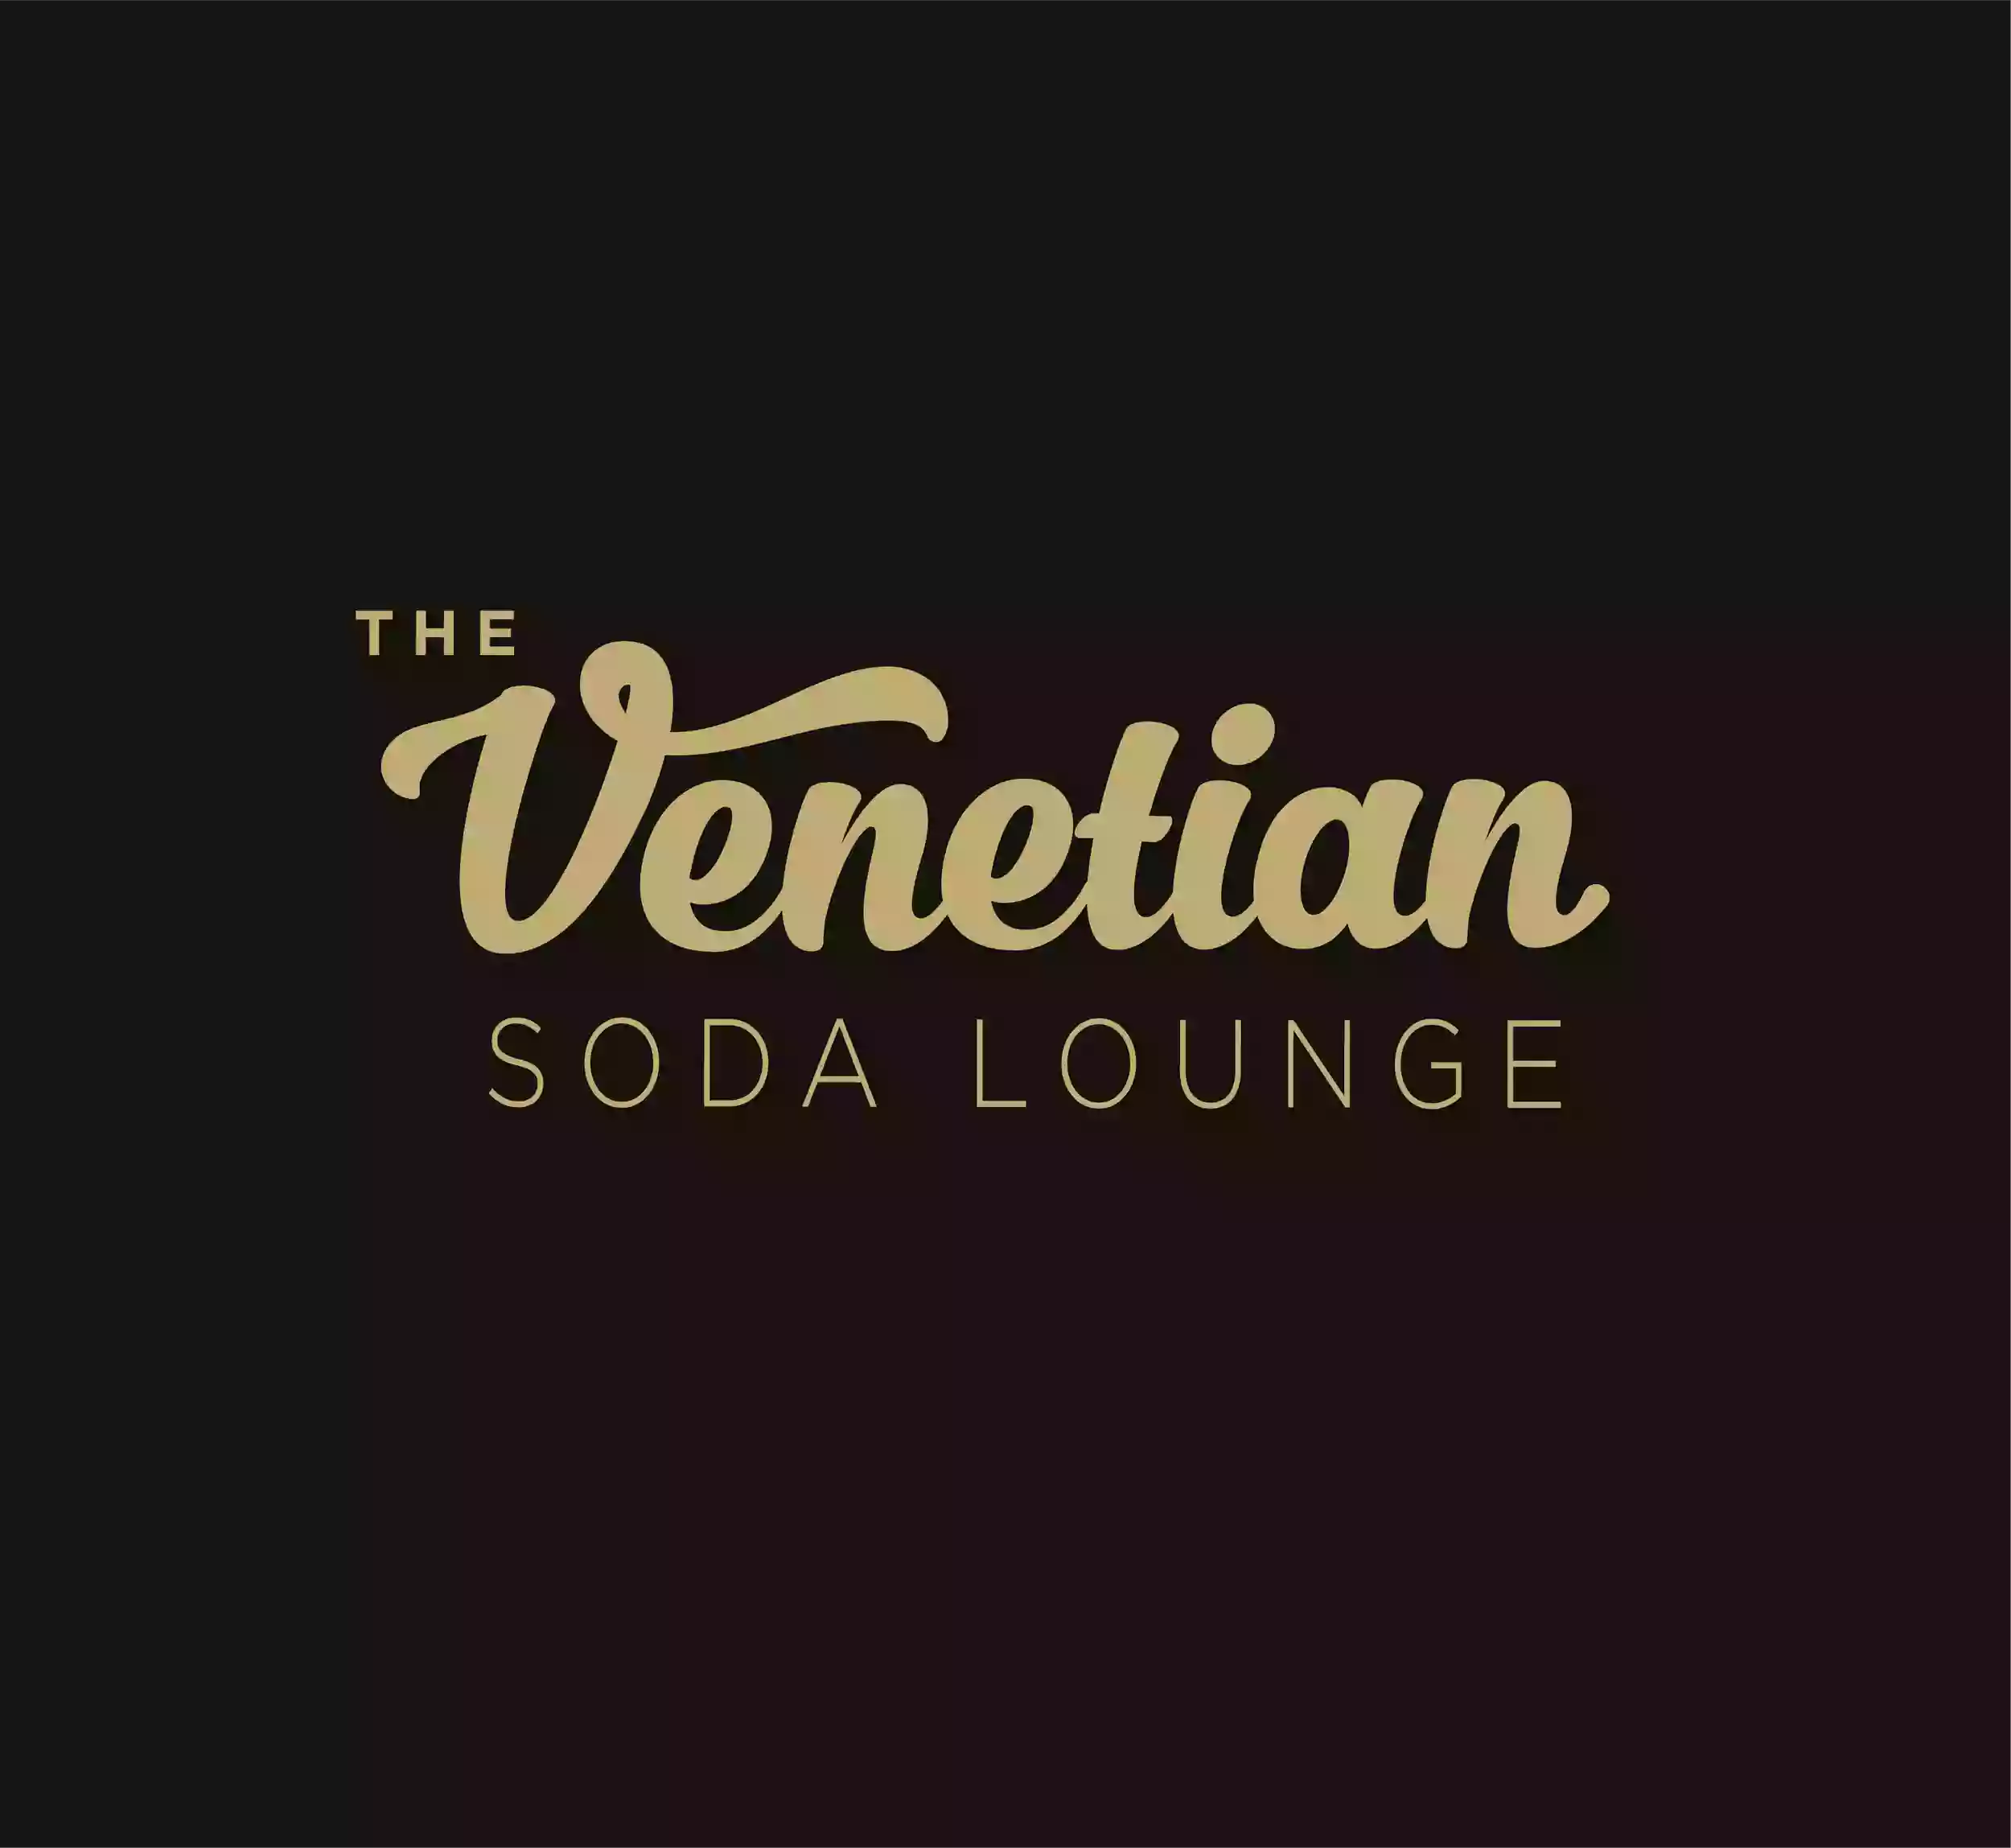 The Venetian Soda Lounge